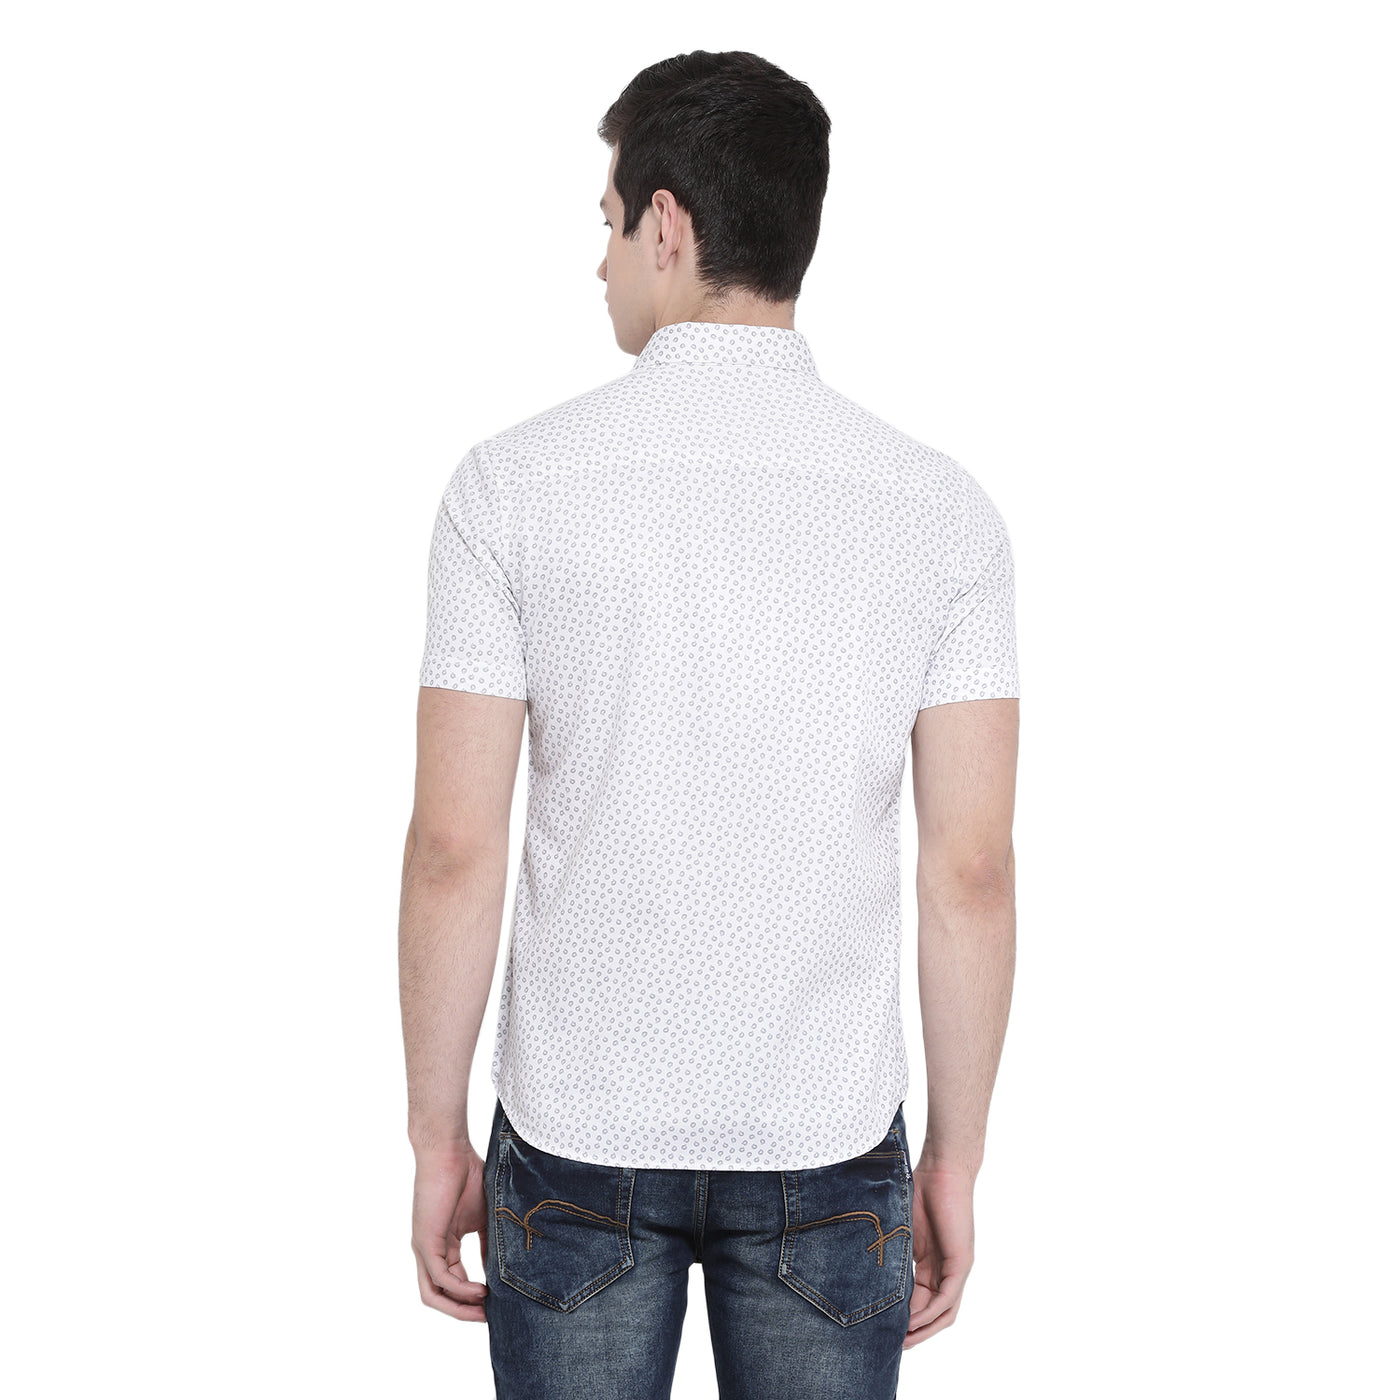 White Printed Shirt - Men Shirts